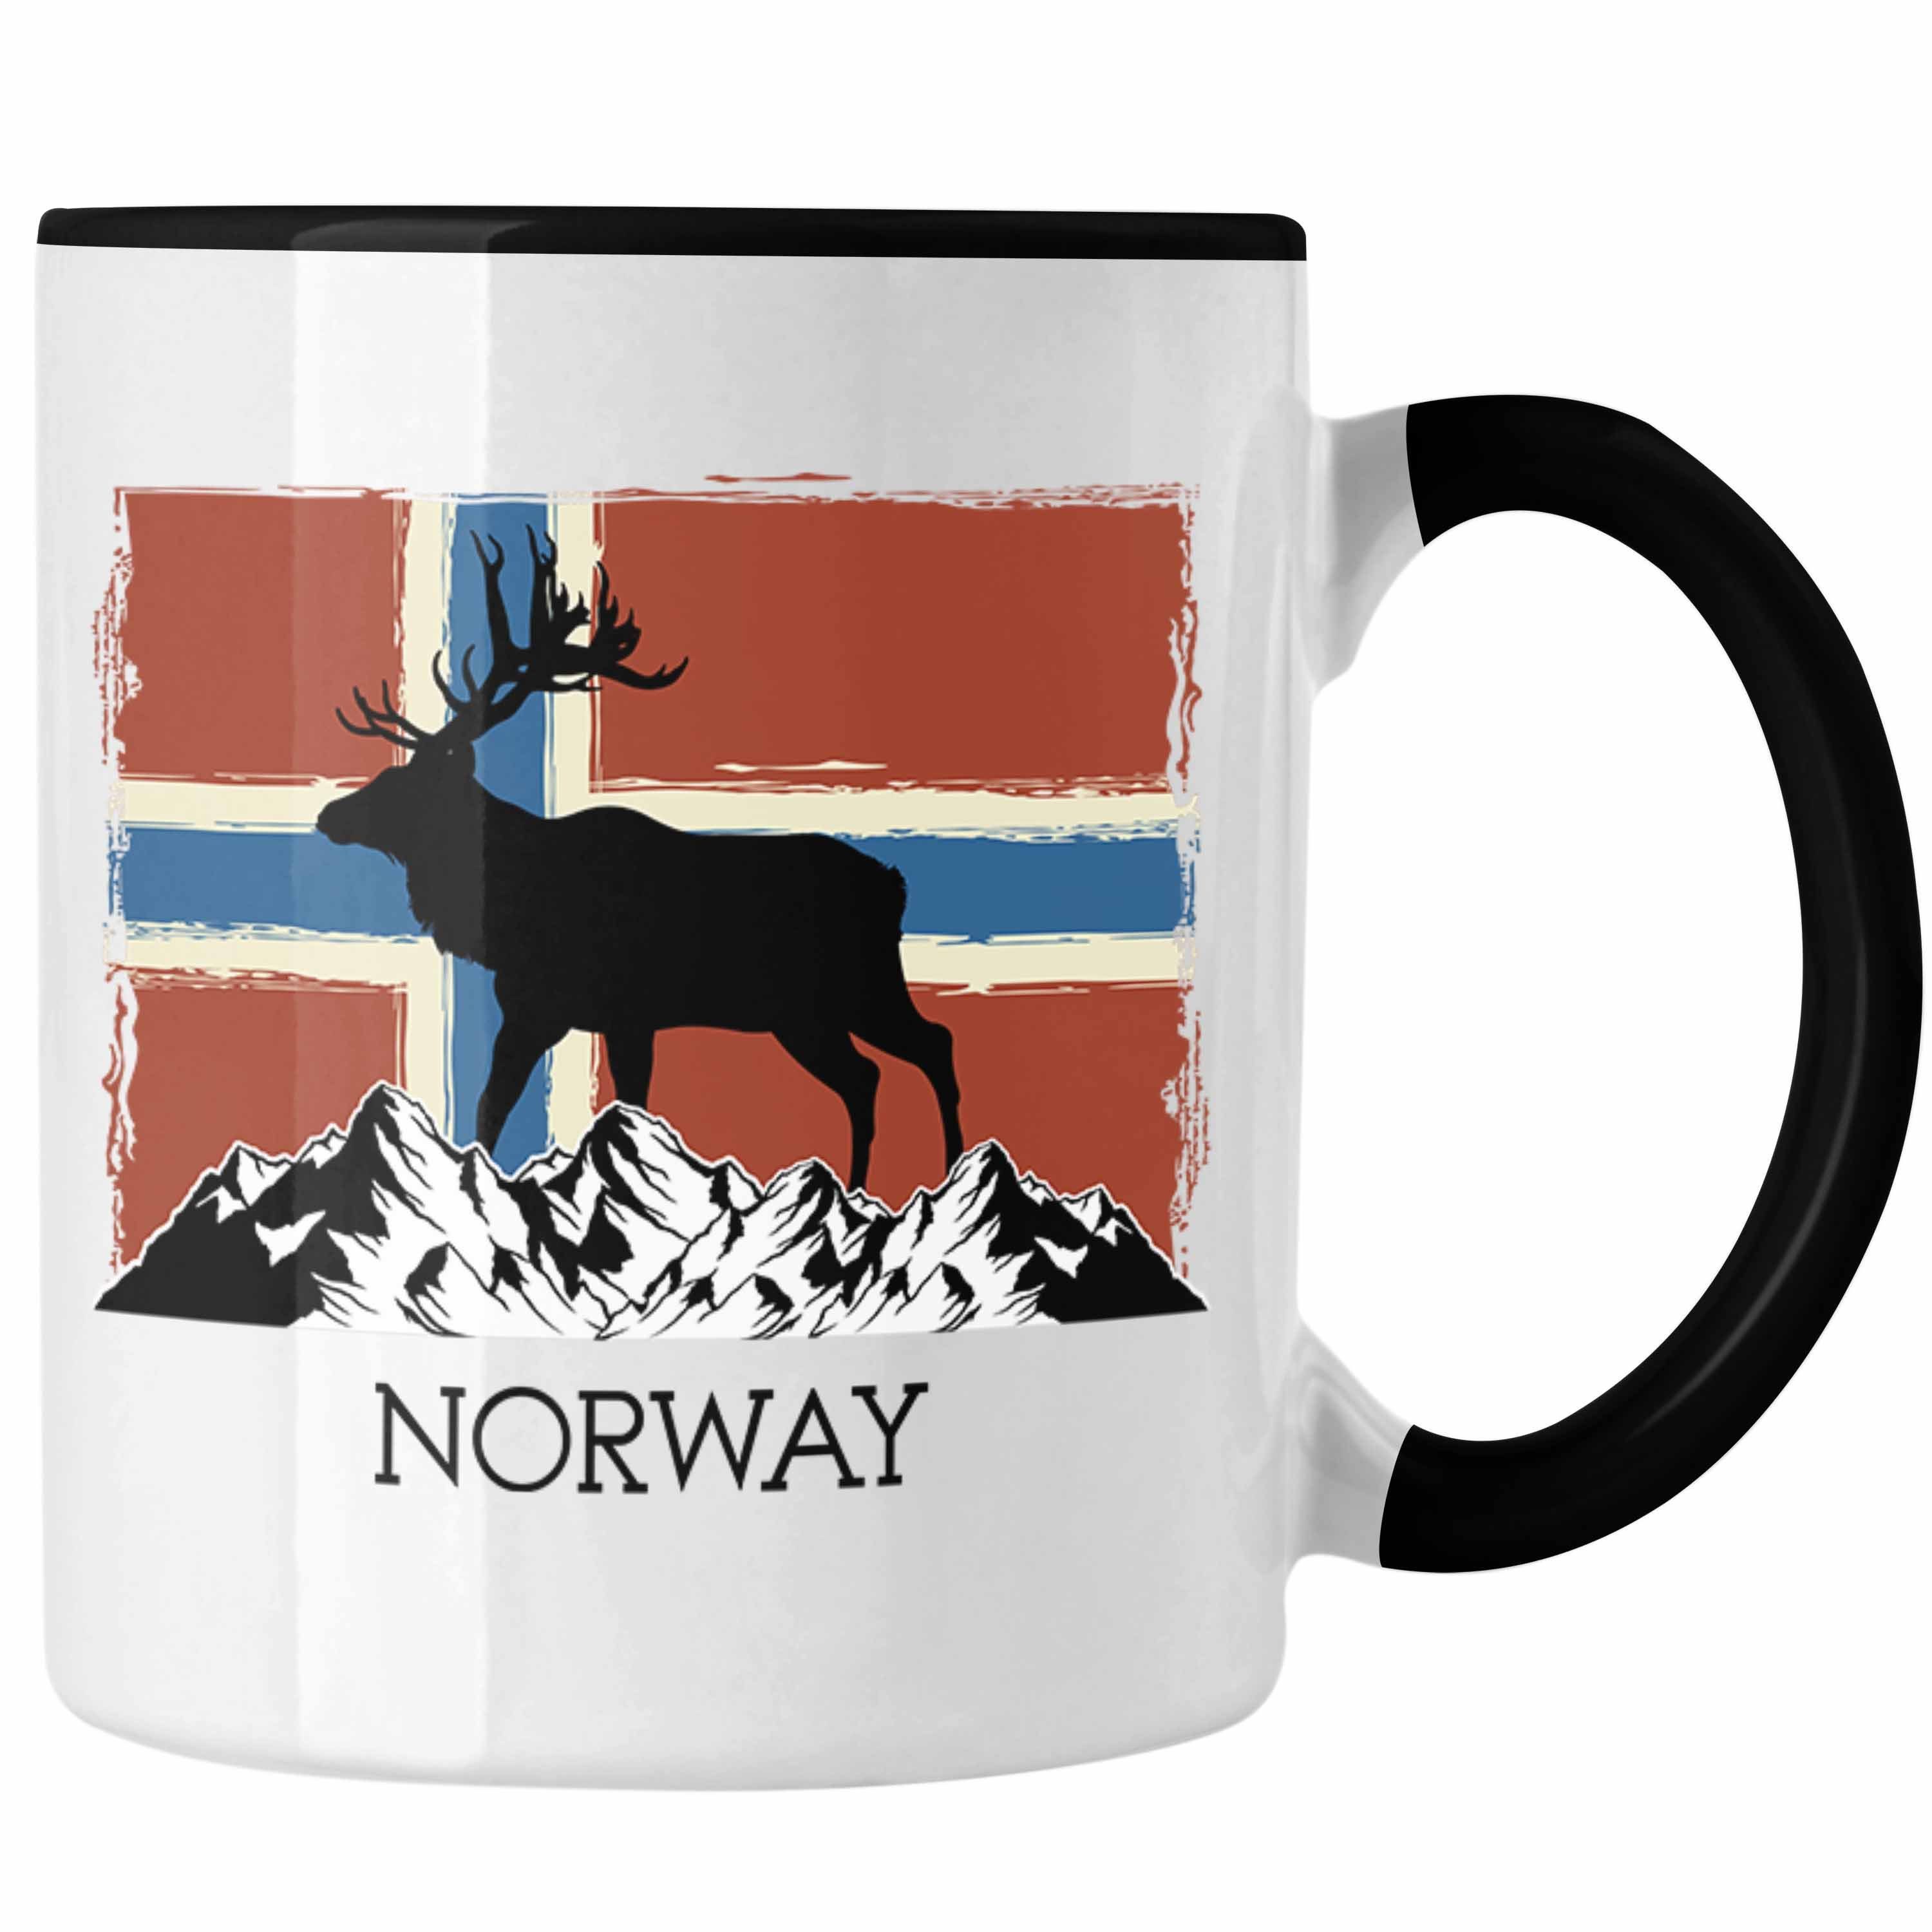 Schwarz Geschenke - Elch Flagge Tasse Tasse Norway Trendation Trendation Nordkap Norwegen